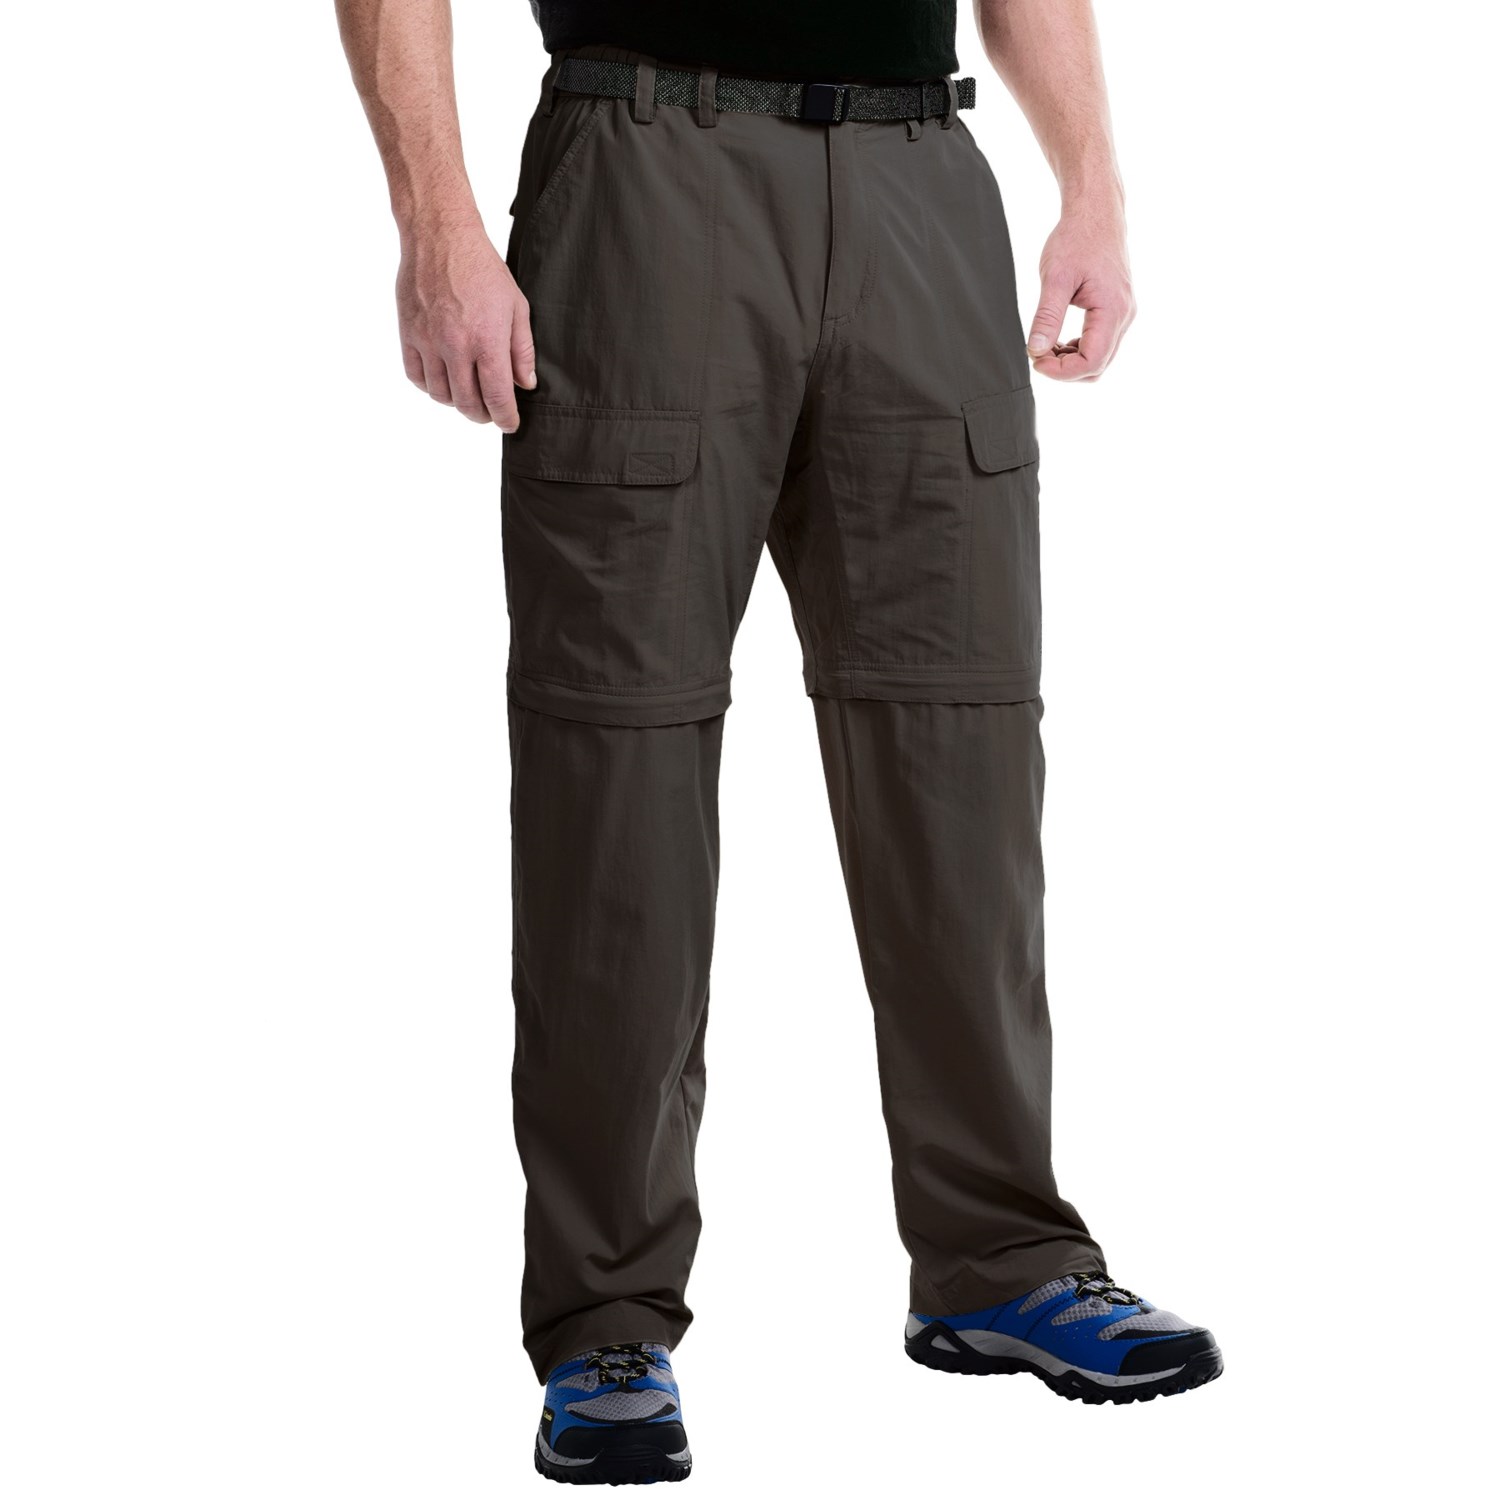 White Sierra Trail Pants - UPF 30, Convertible (For Men) - Save 30%